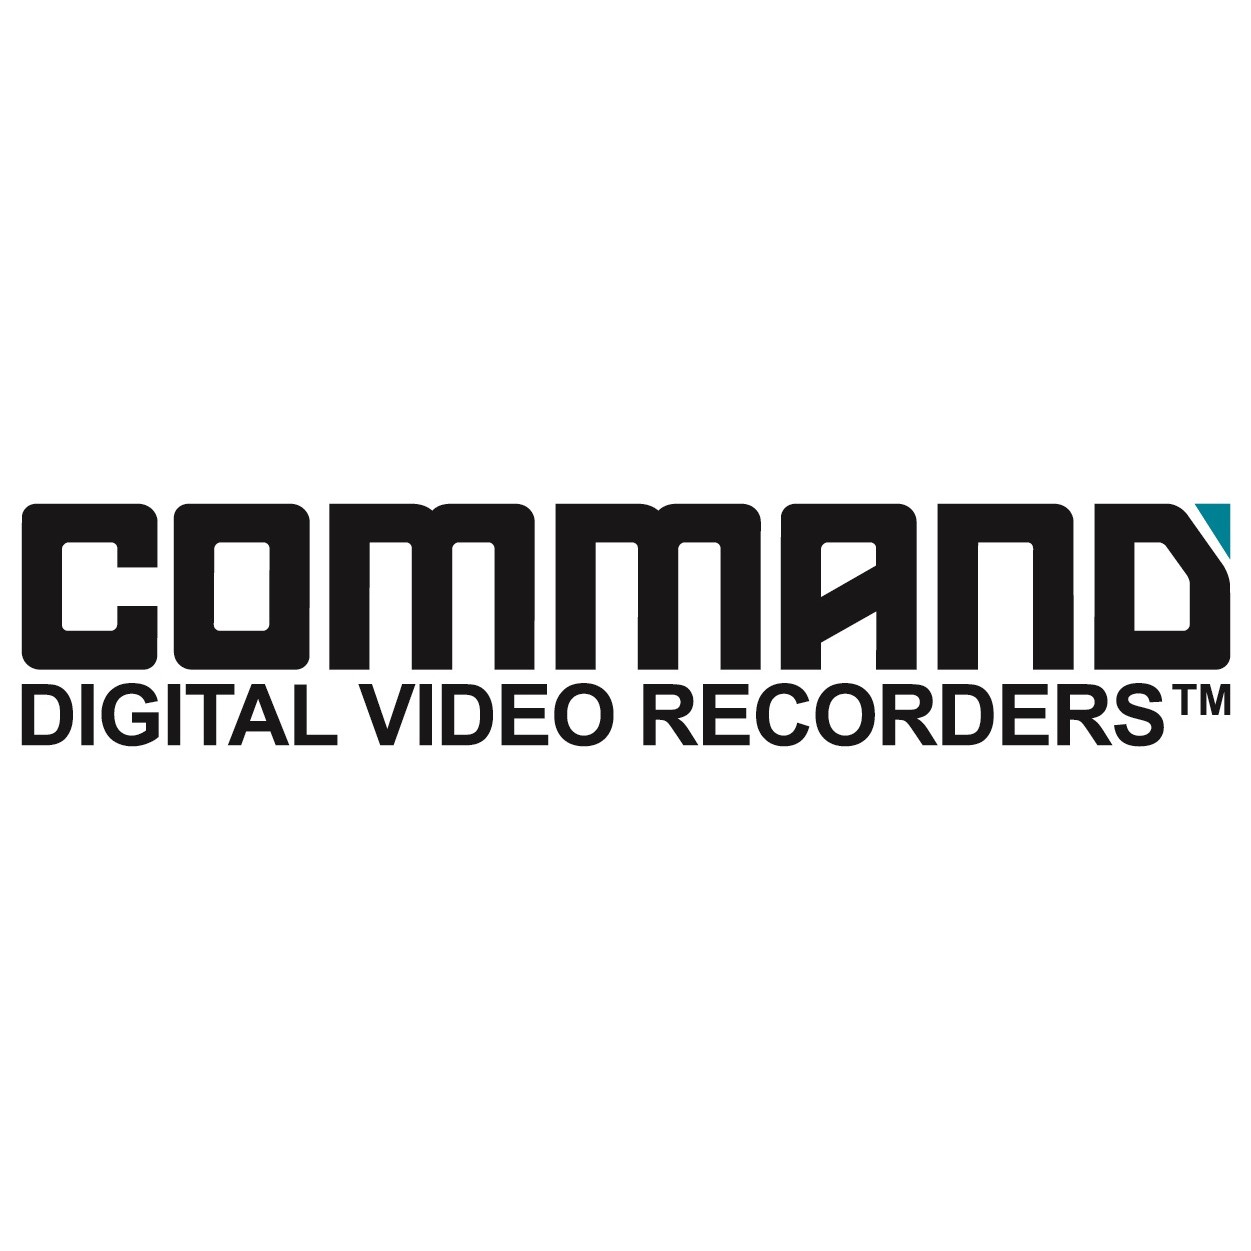 Command Digital Video Recorders